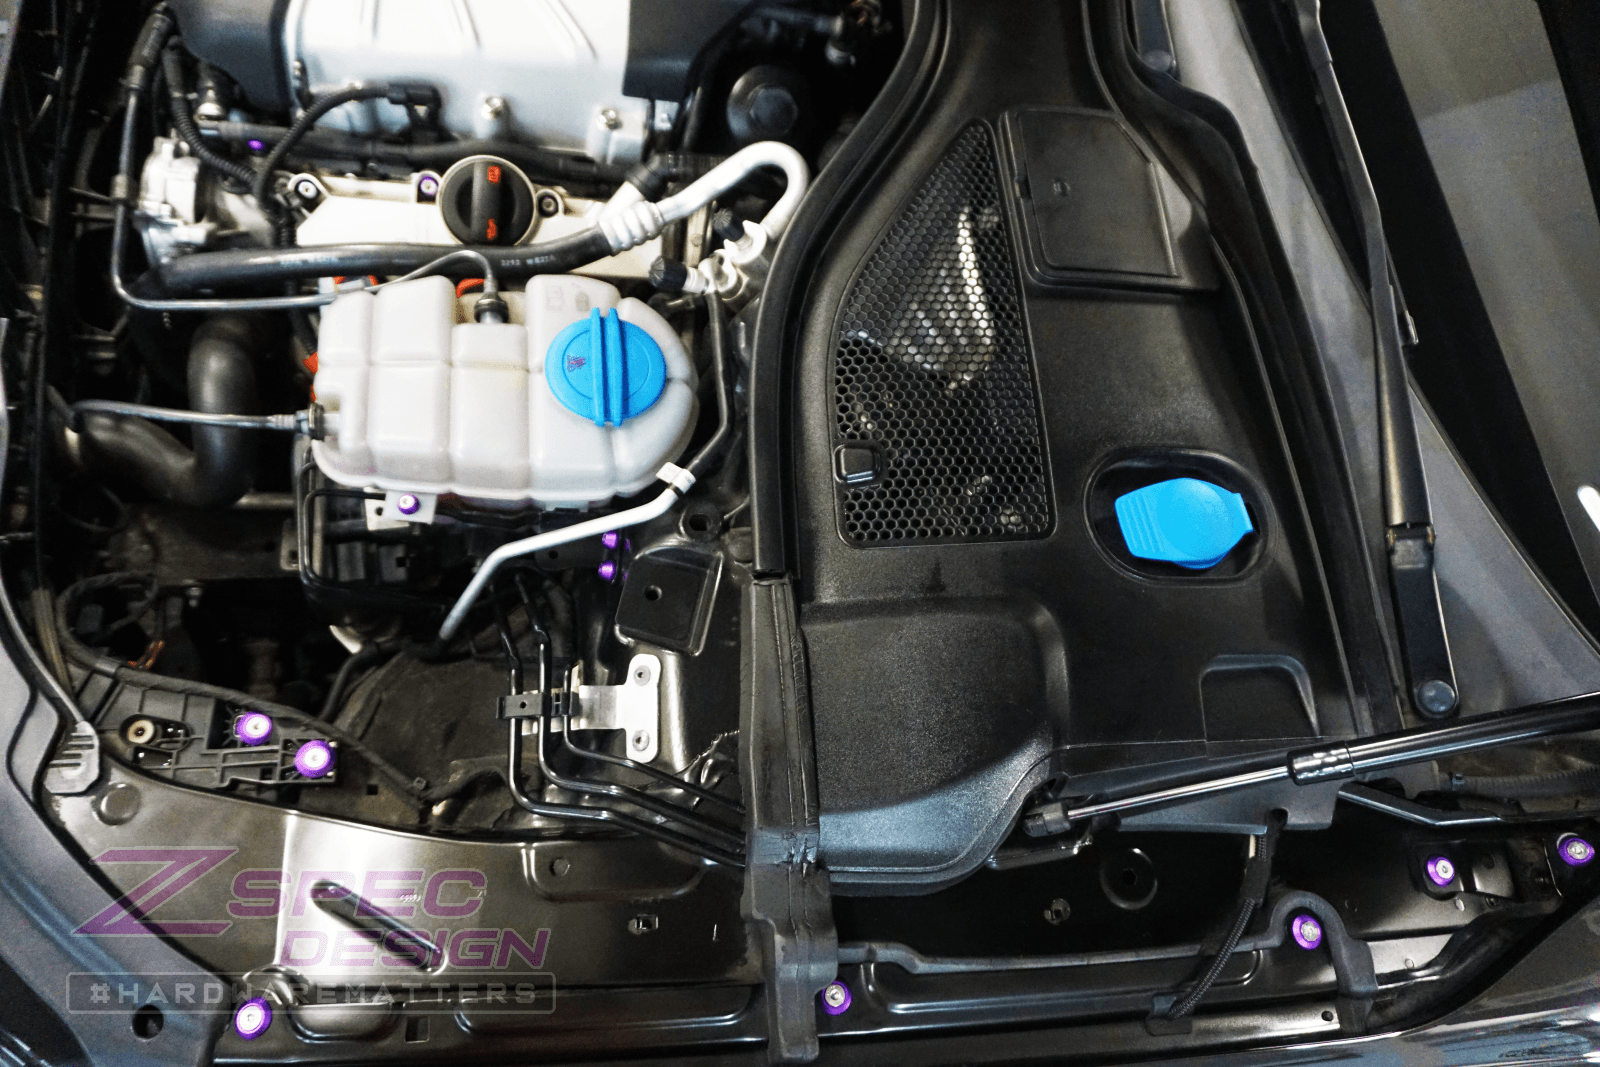 ZSPEC "Stage 3" Dress Up Bolts® Fastener Kit for '12-18 Audi A7 4G8 3.0L, Stainless & Billet Engine Bay Trunk Upgrade Performance Hardware Down Up Rock Star Valve Cover Plenum